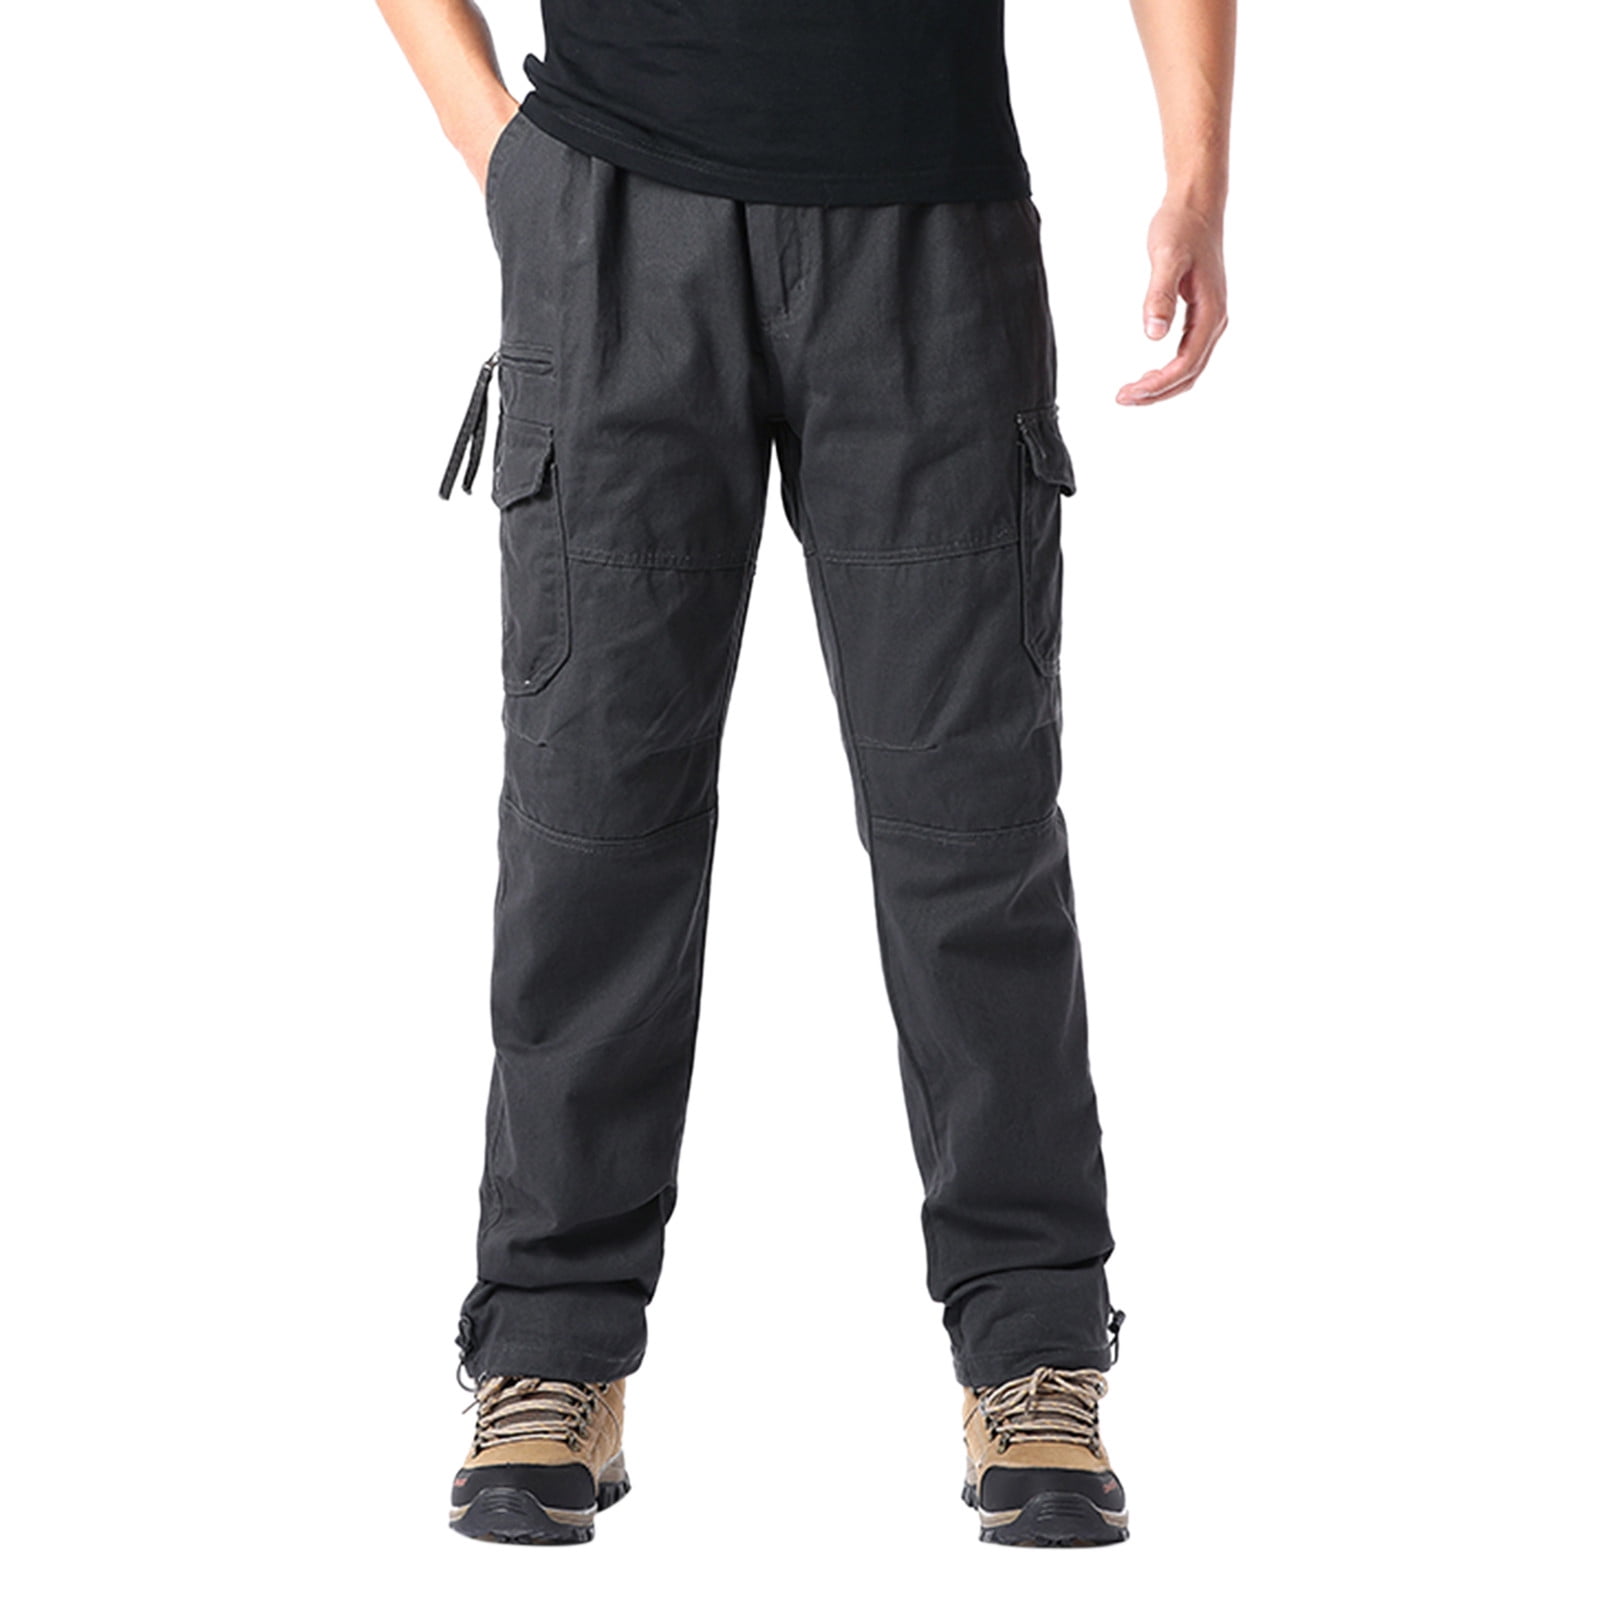 wofedyo cargo pants for men Mens Fashion Casual Multi Pocket Zipper ...